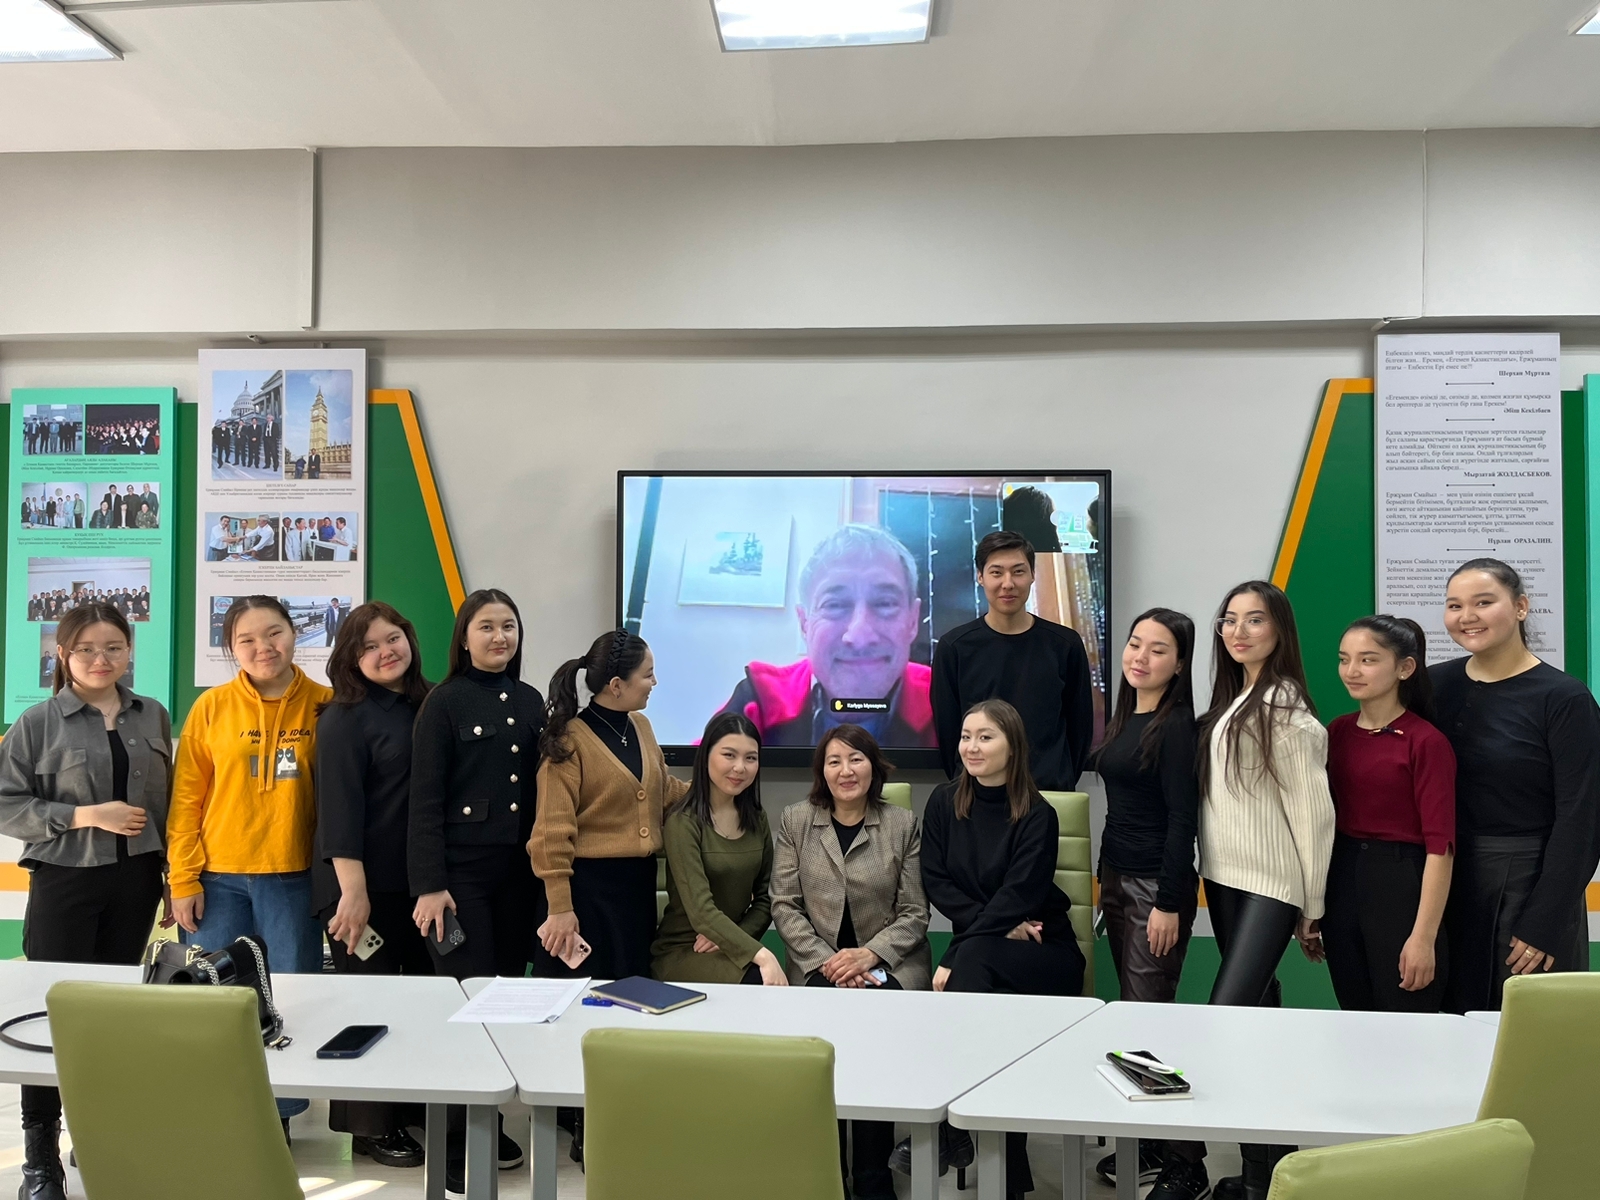 Eric Freedman pictured with students at Al-Farabi Kazakh National University in Almaty, Kazakhstan. 